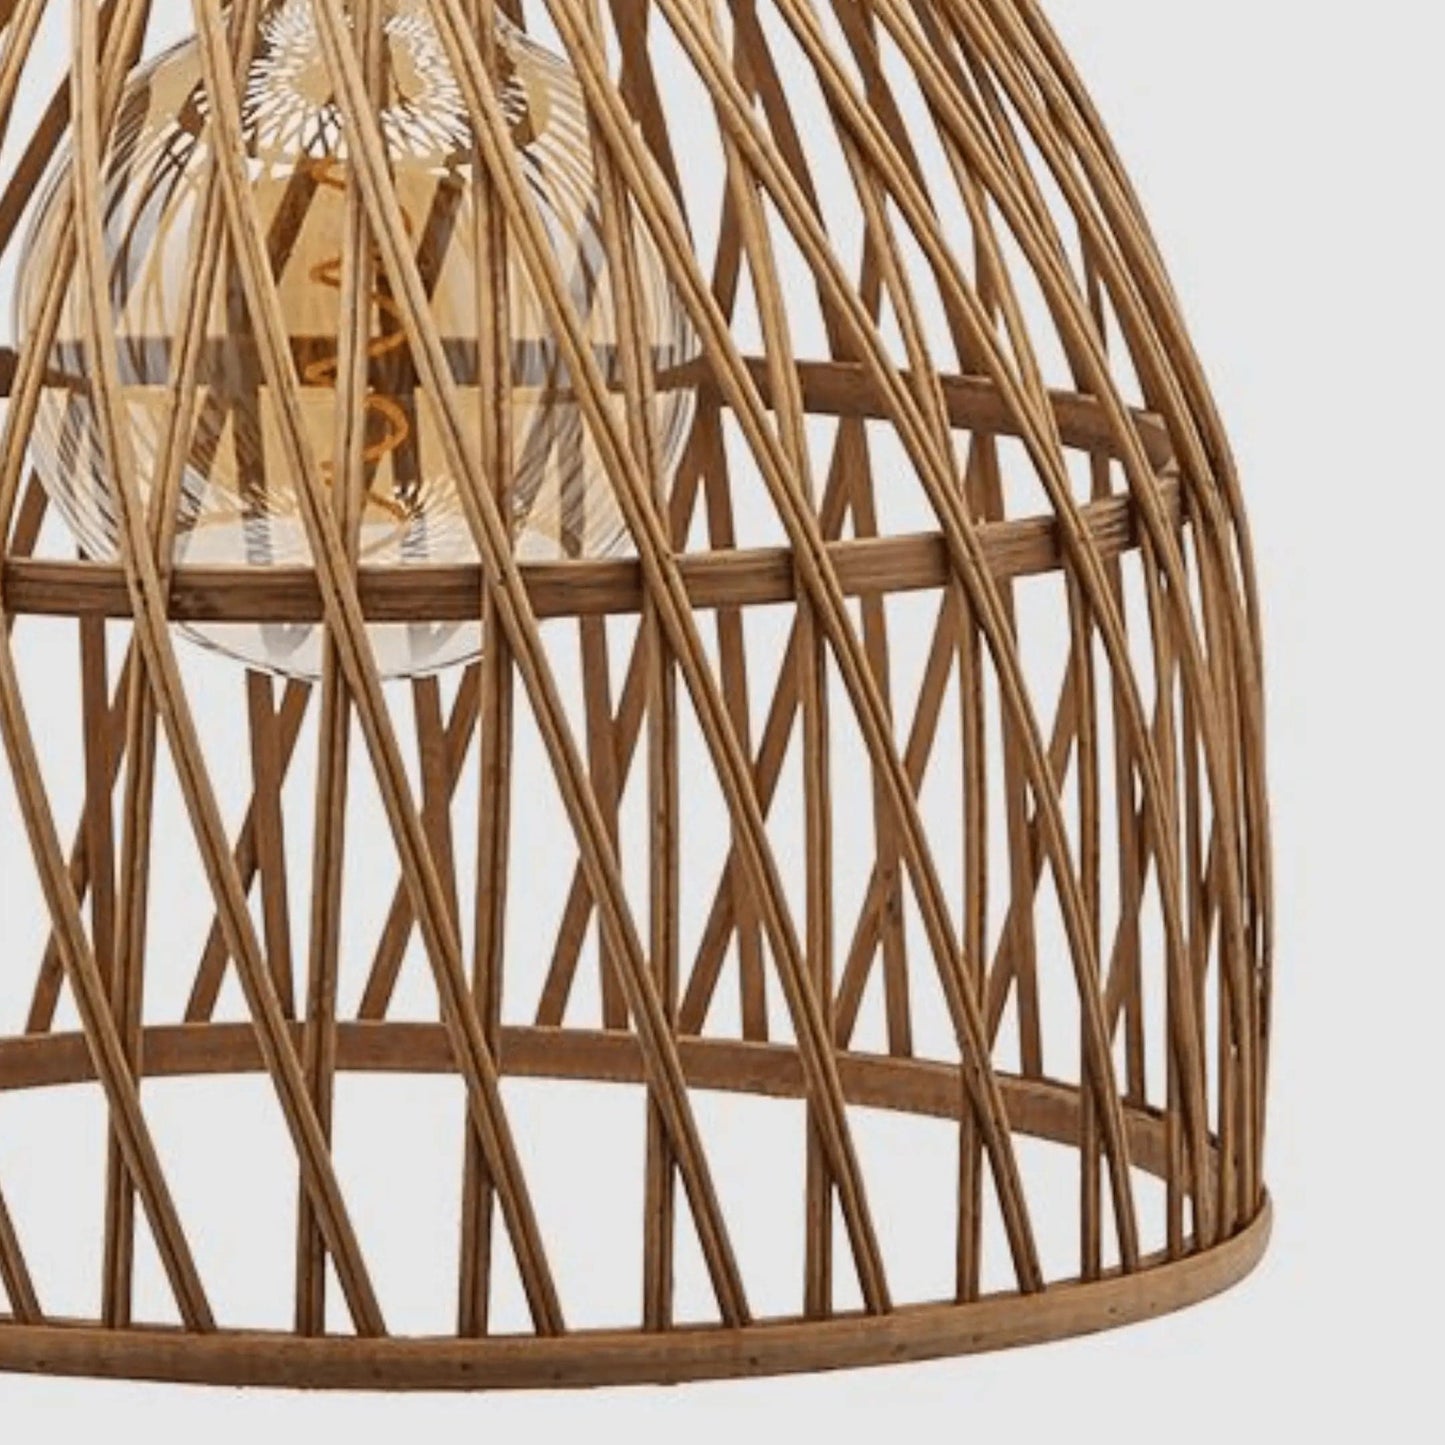 Italiving Lampe Deckenleuchte aus Naturmaterial Bambus Rautenmuster H 43 cm Ø 33 cm